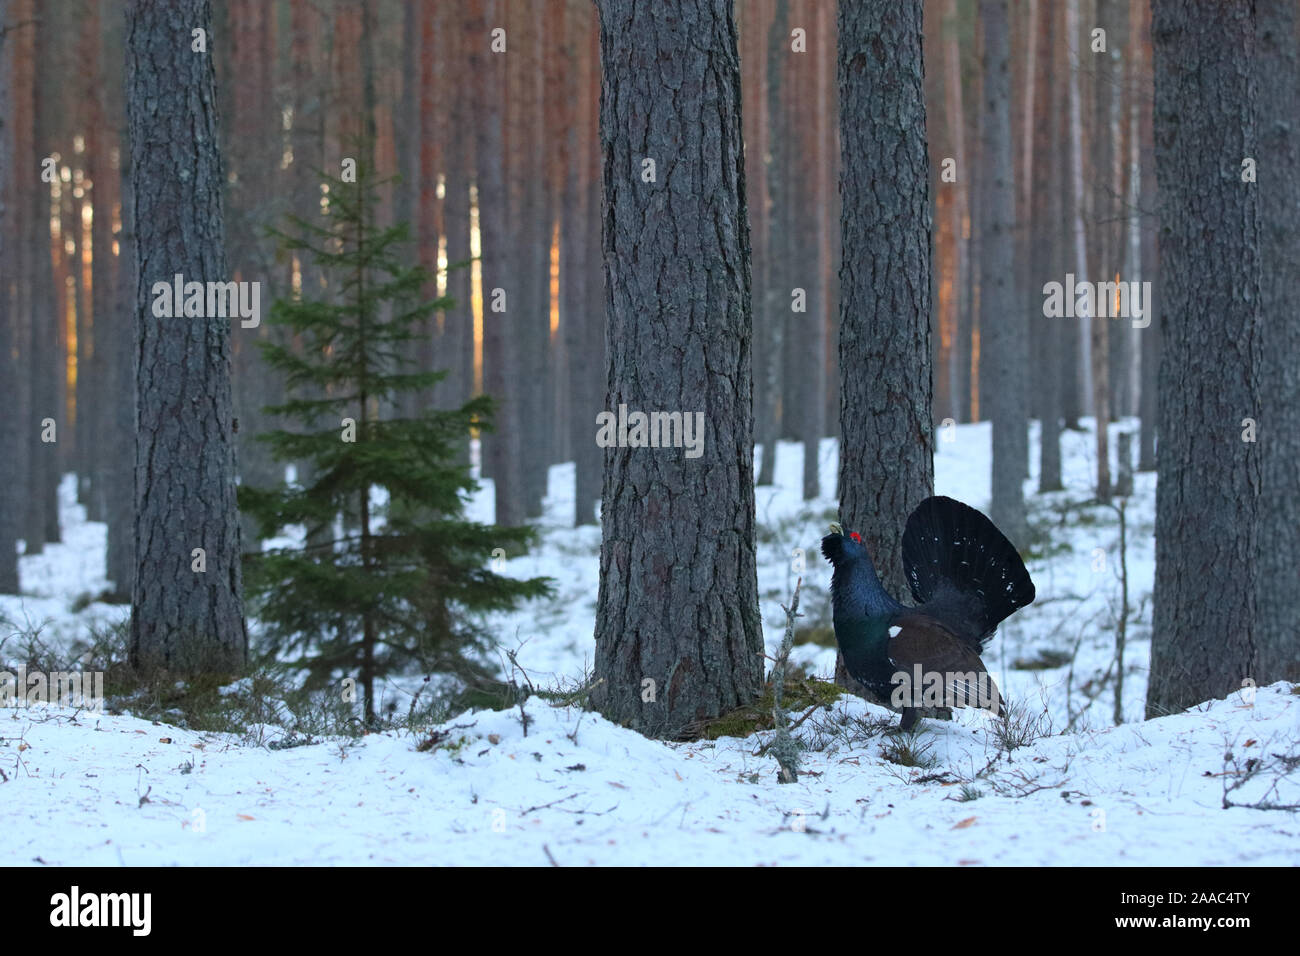 Mâle Western capercaillie (Tetrao urogallus) dans la forêt de pins, Tartumaa, sud de l'Estonie Banque D'Images